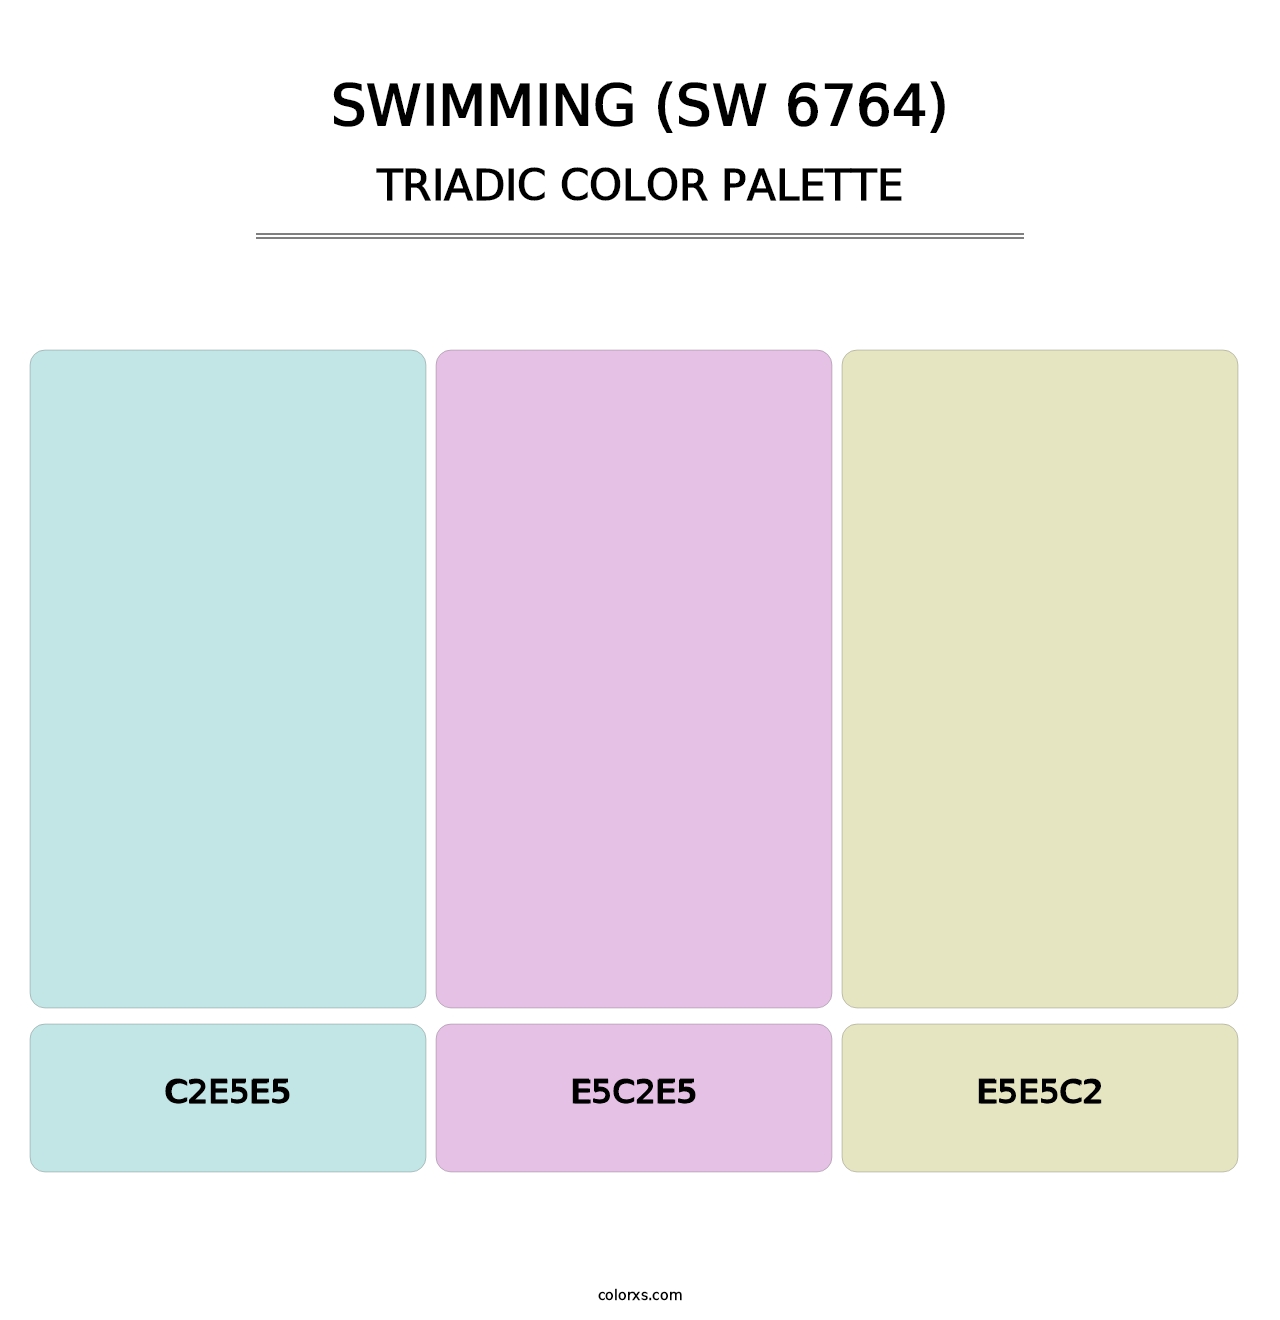 Swimming (SW 6764) - Triadic Color Palette